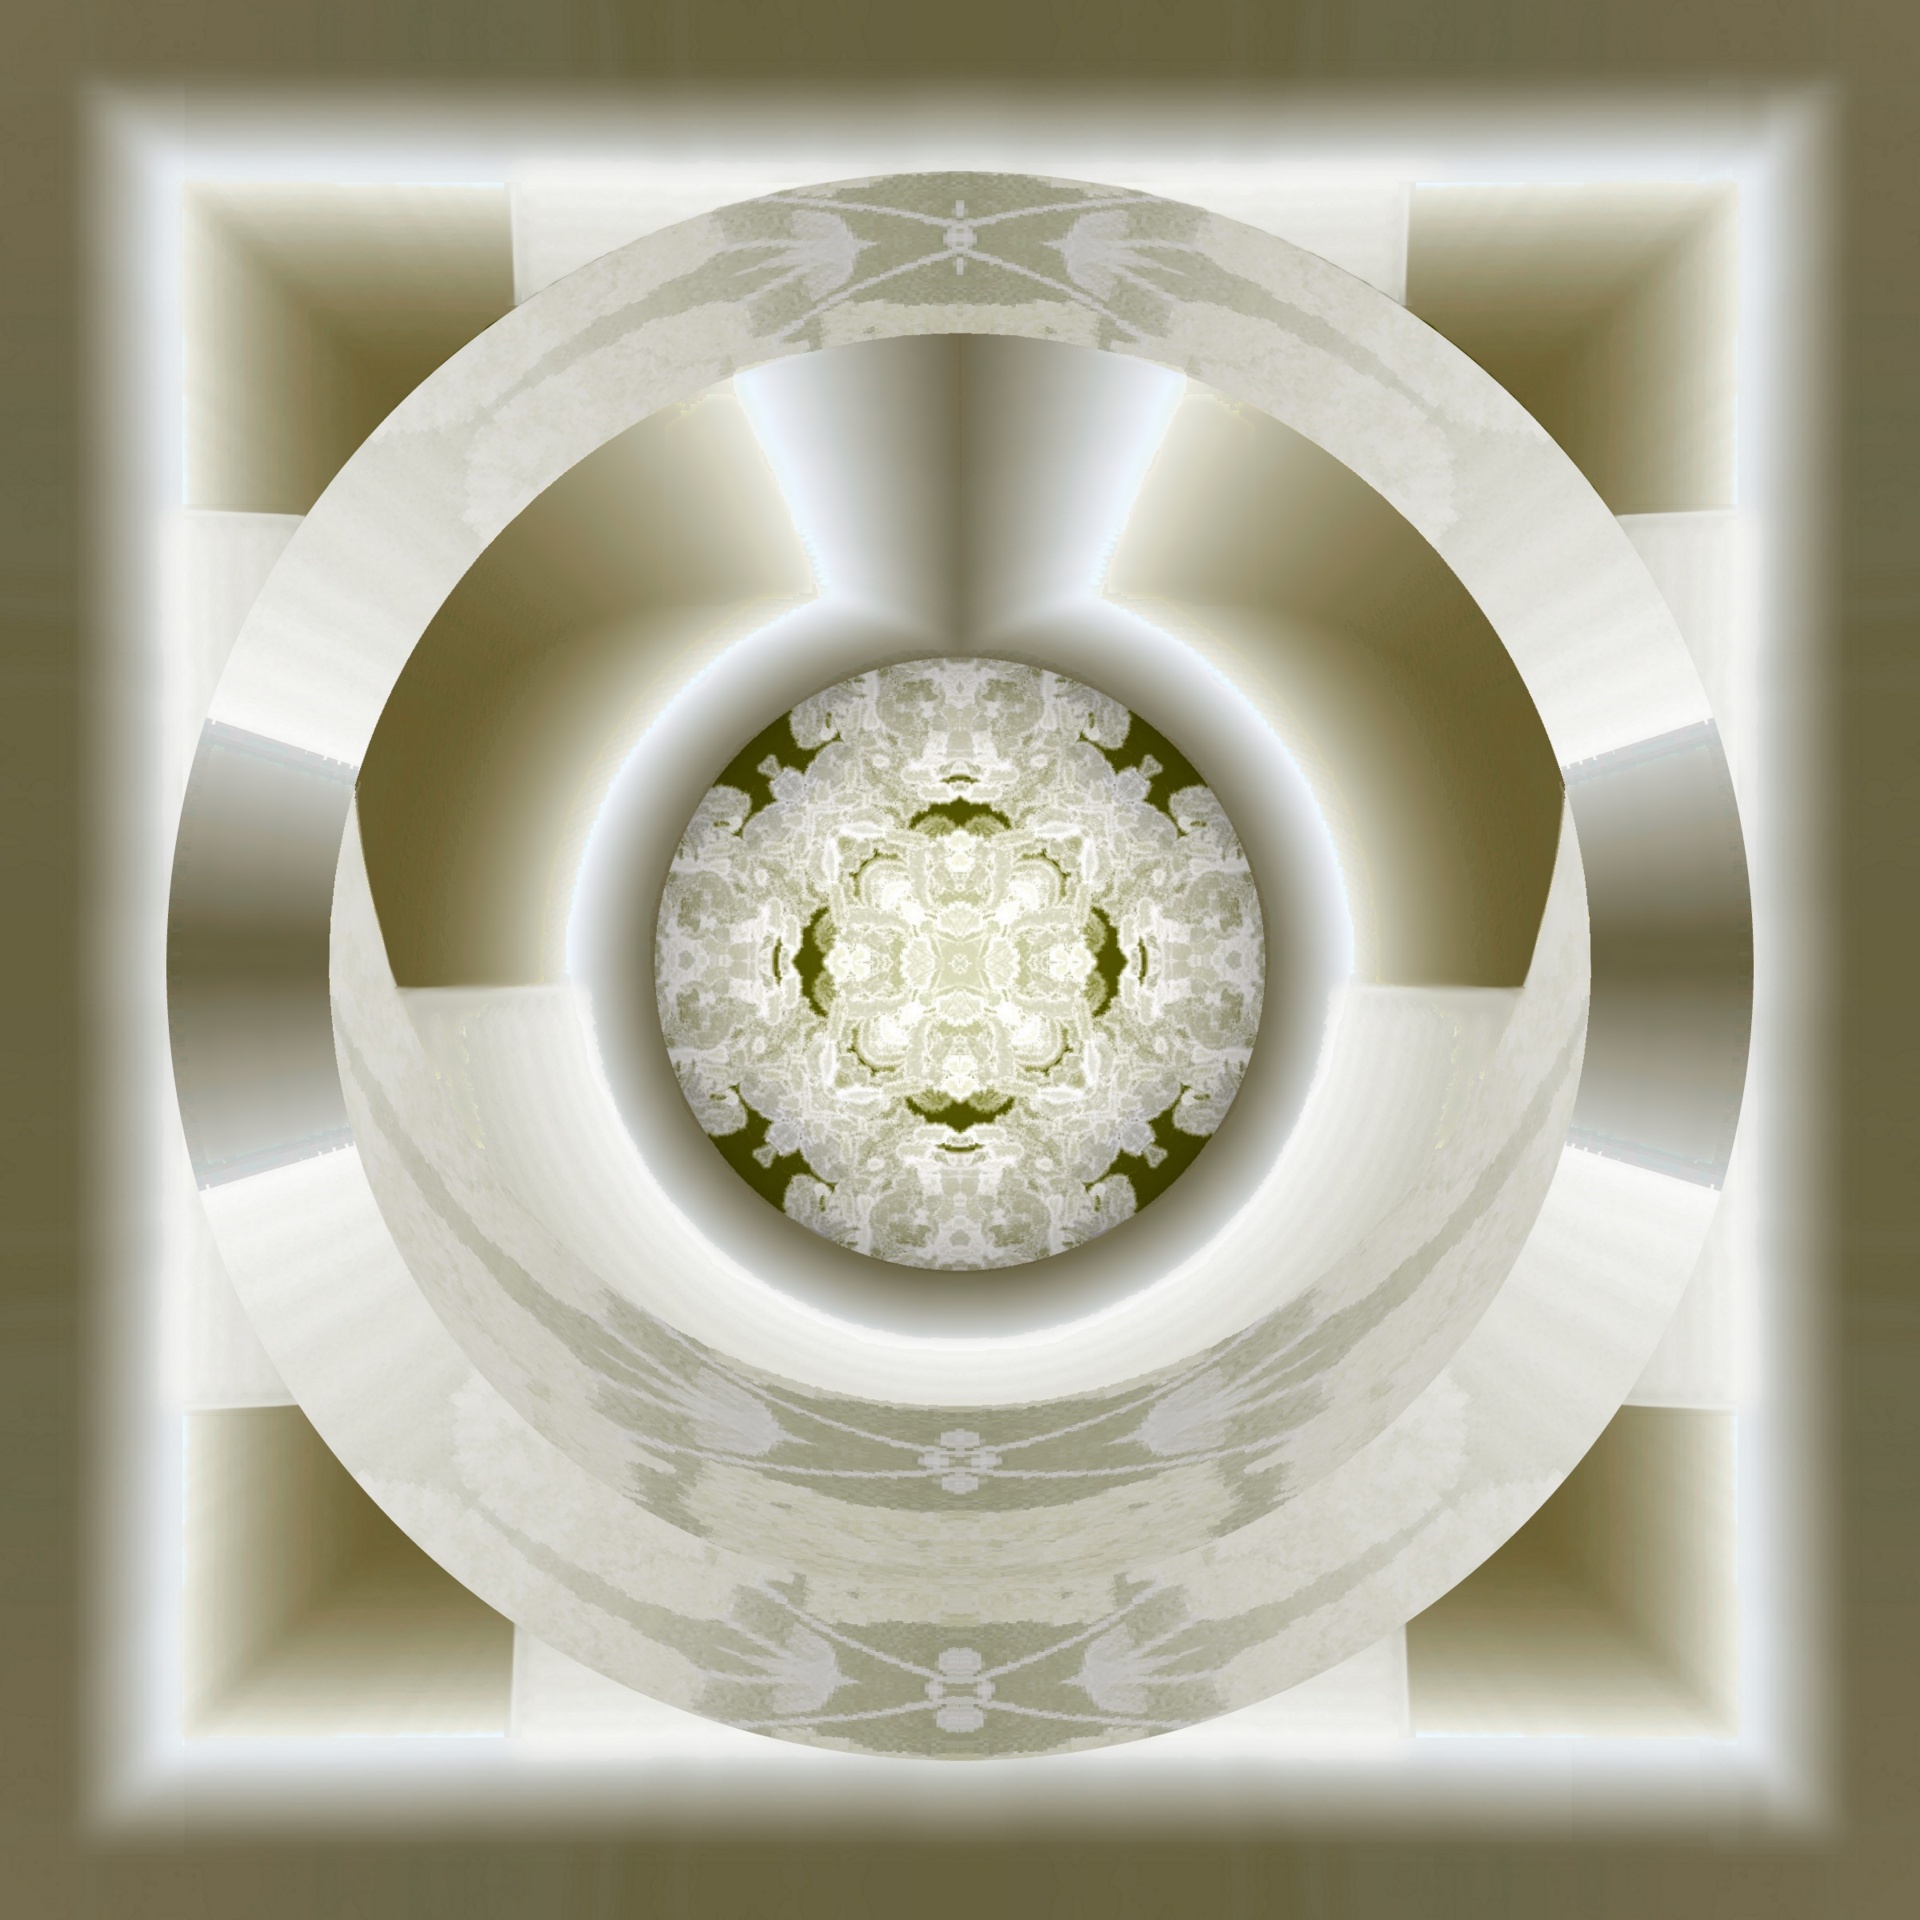 seamless tile repeat design fantasy hubcap free photo